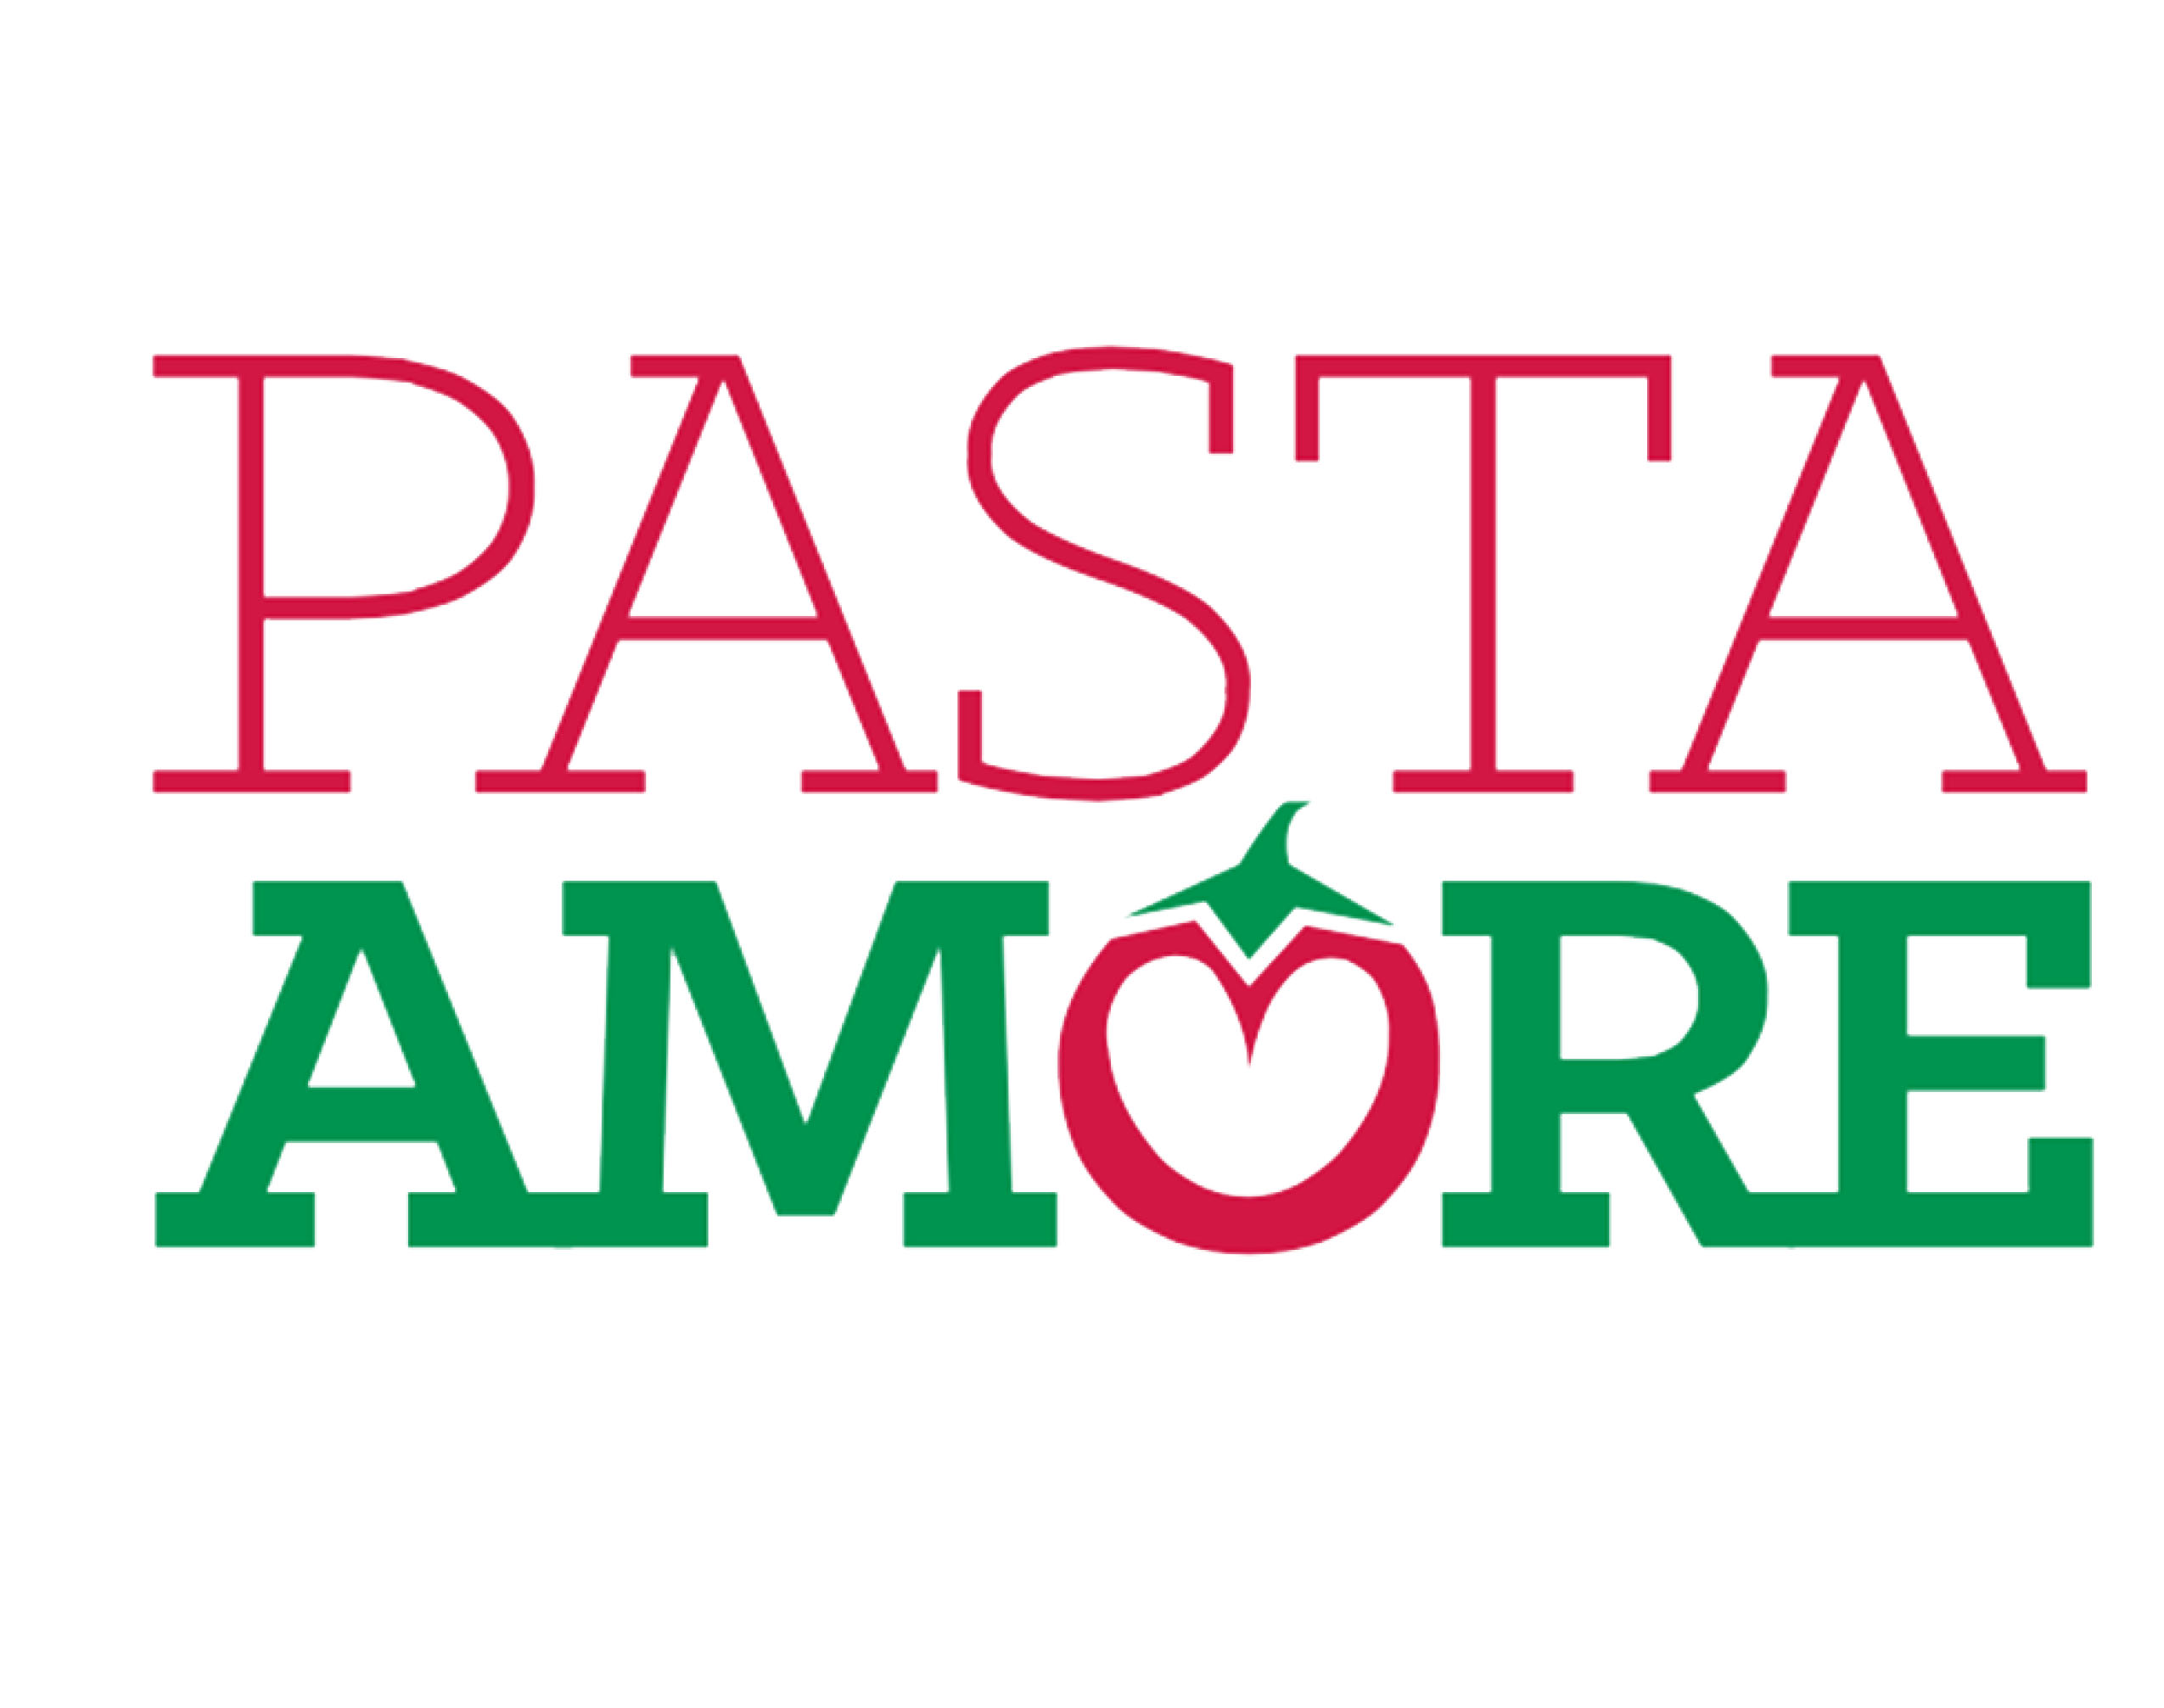 Pasta Amore Logo